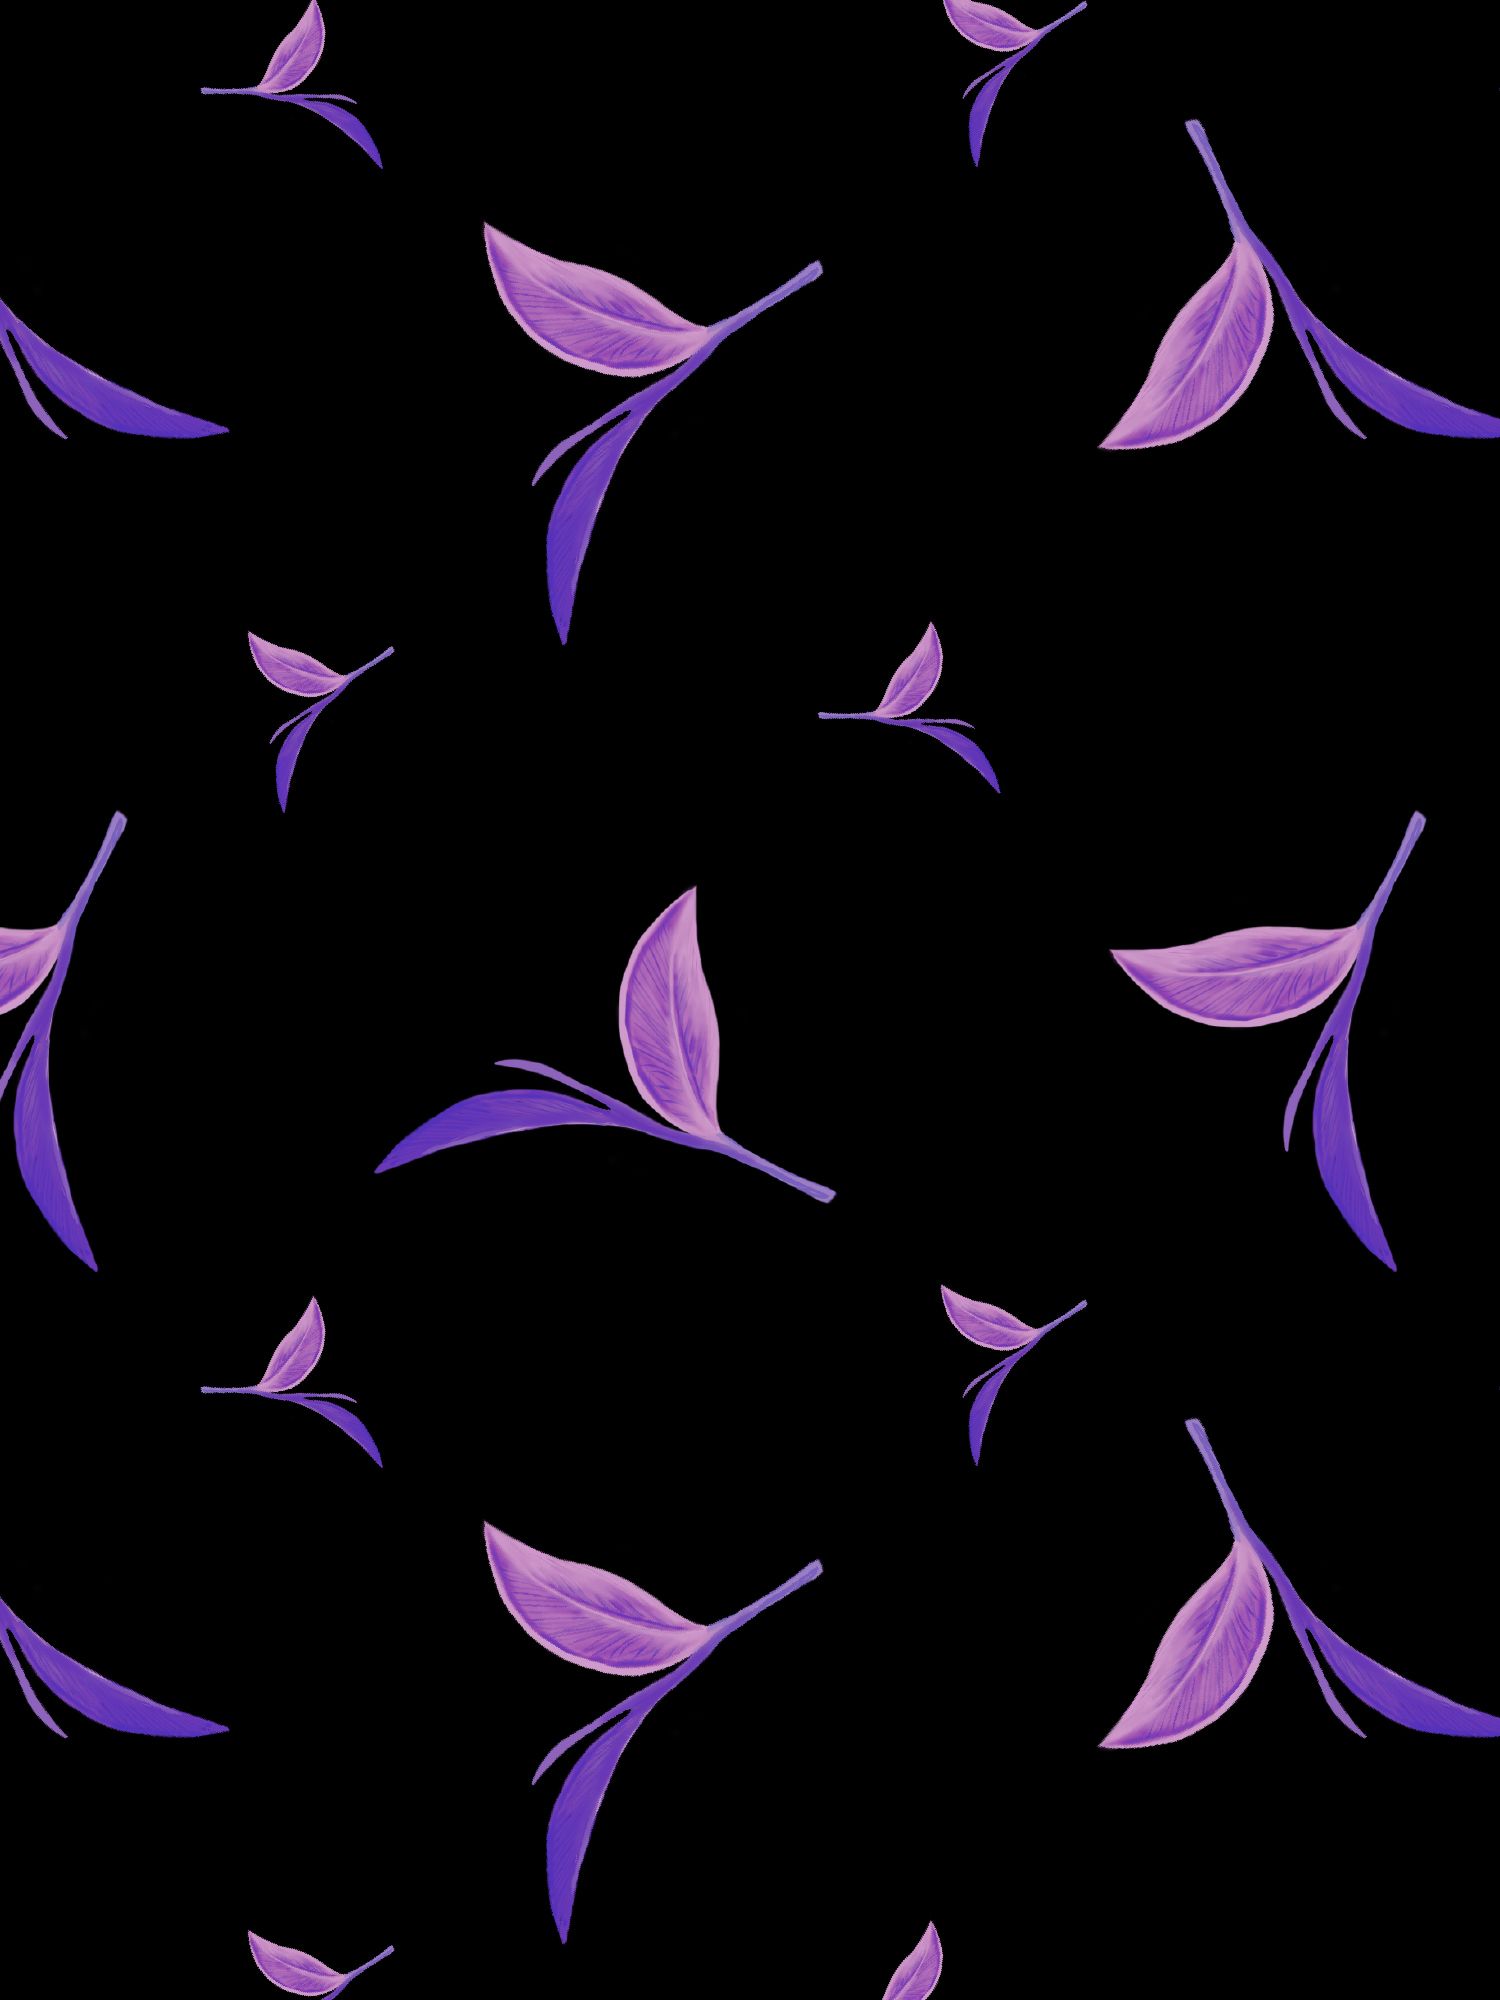 Spooky Halloween purple leaves wallpaper. Leysa Flores Design